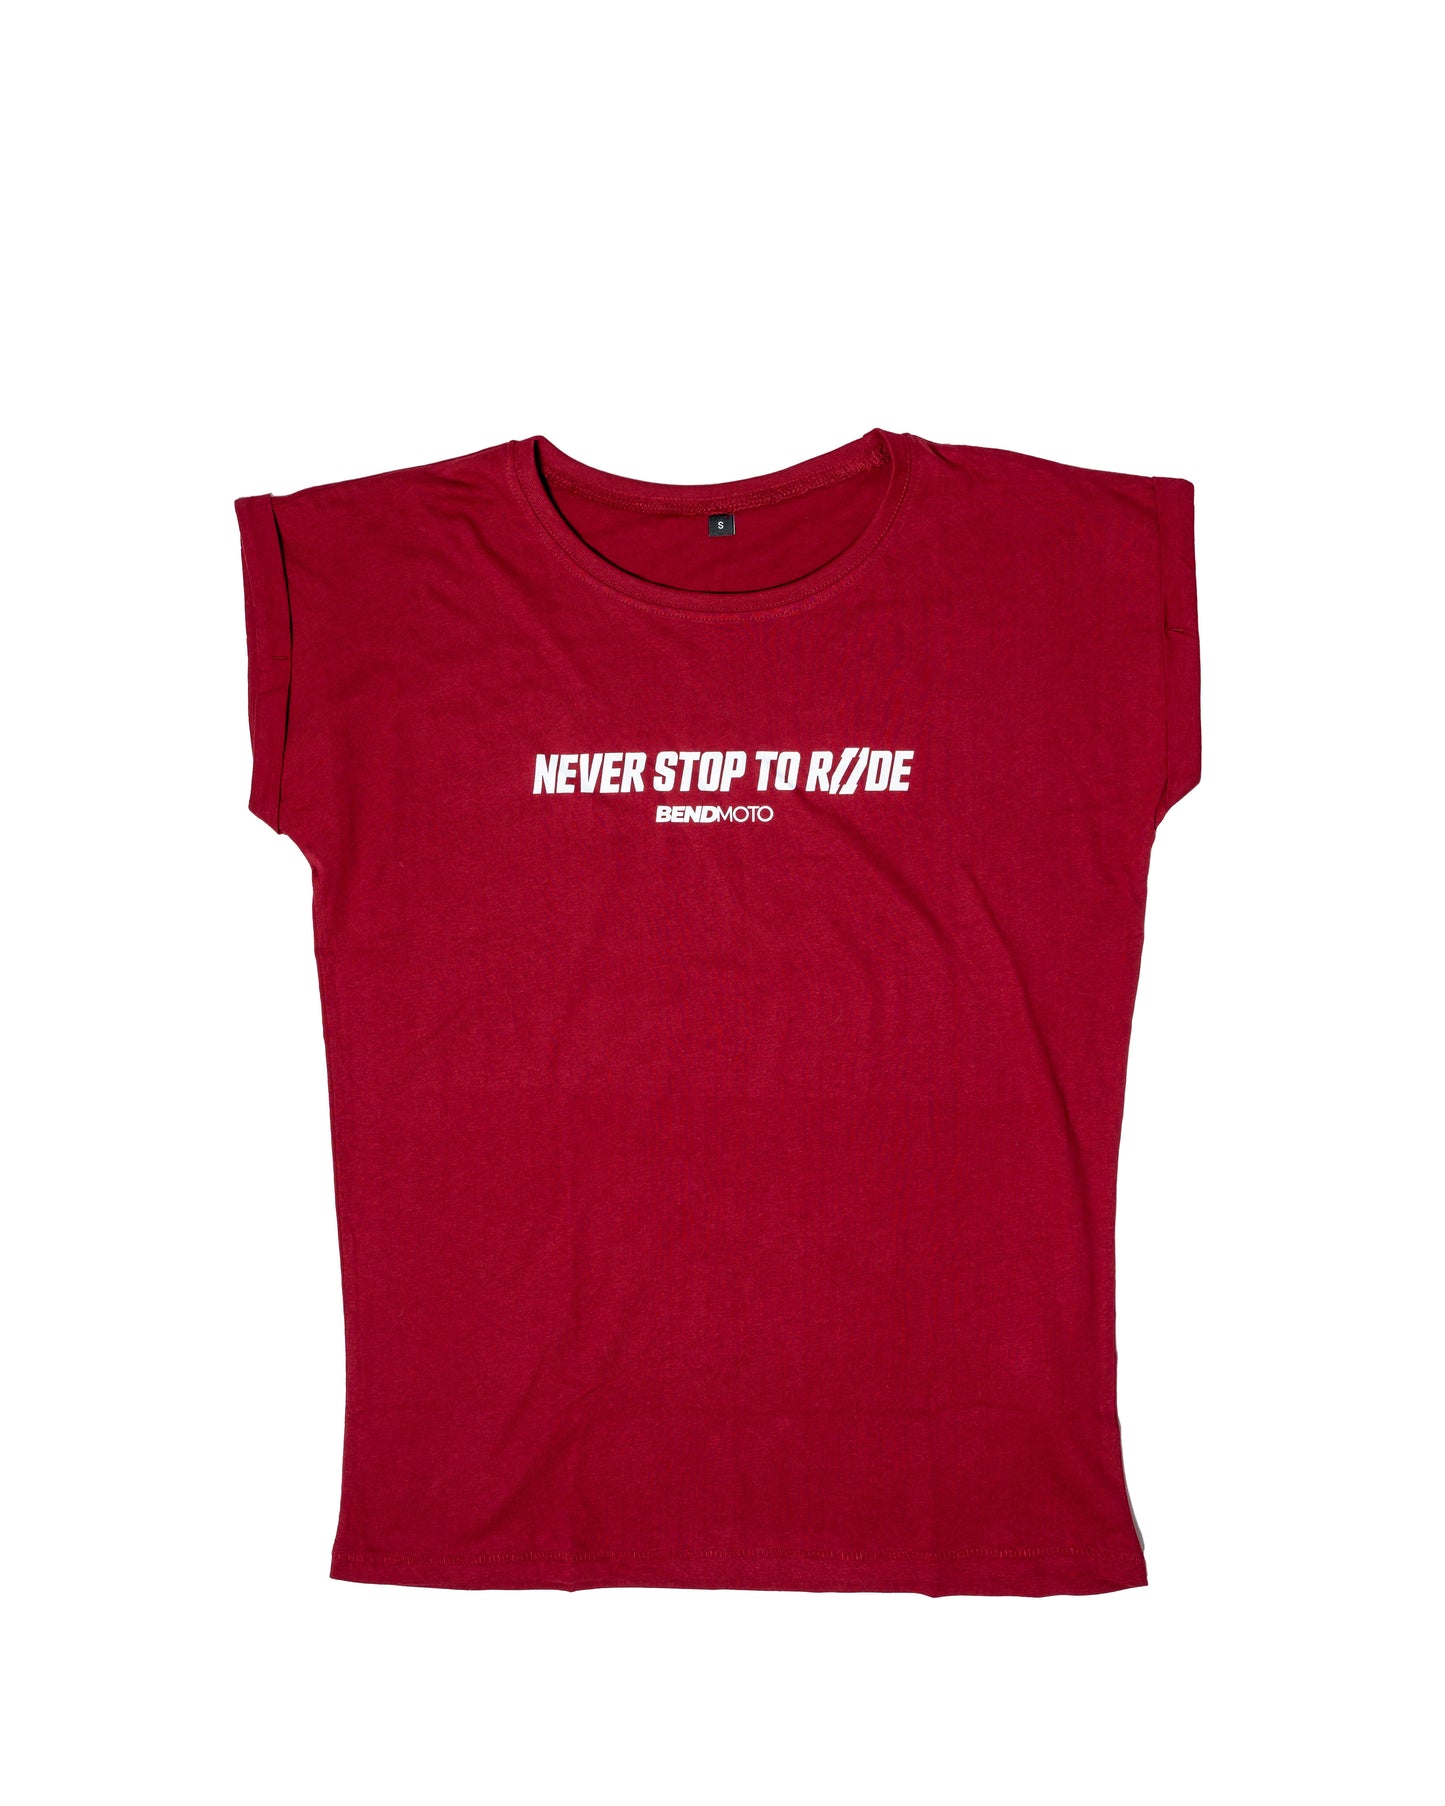 NSTR Red Edition Shirt (Frauen)